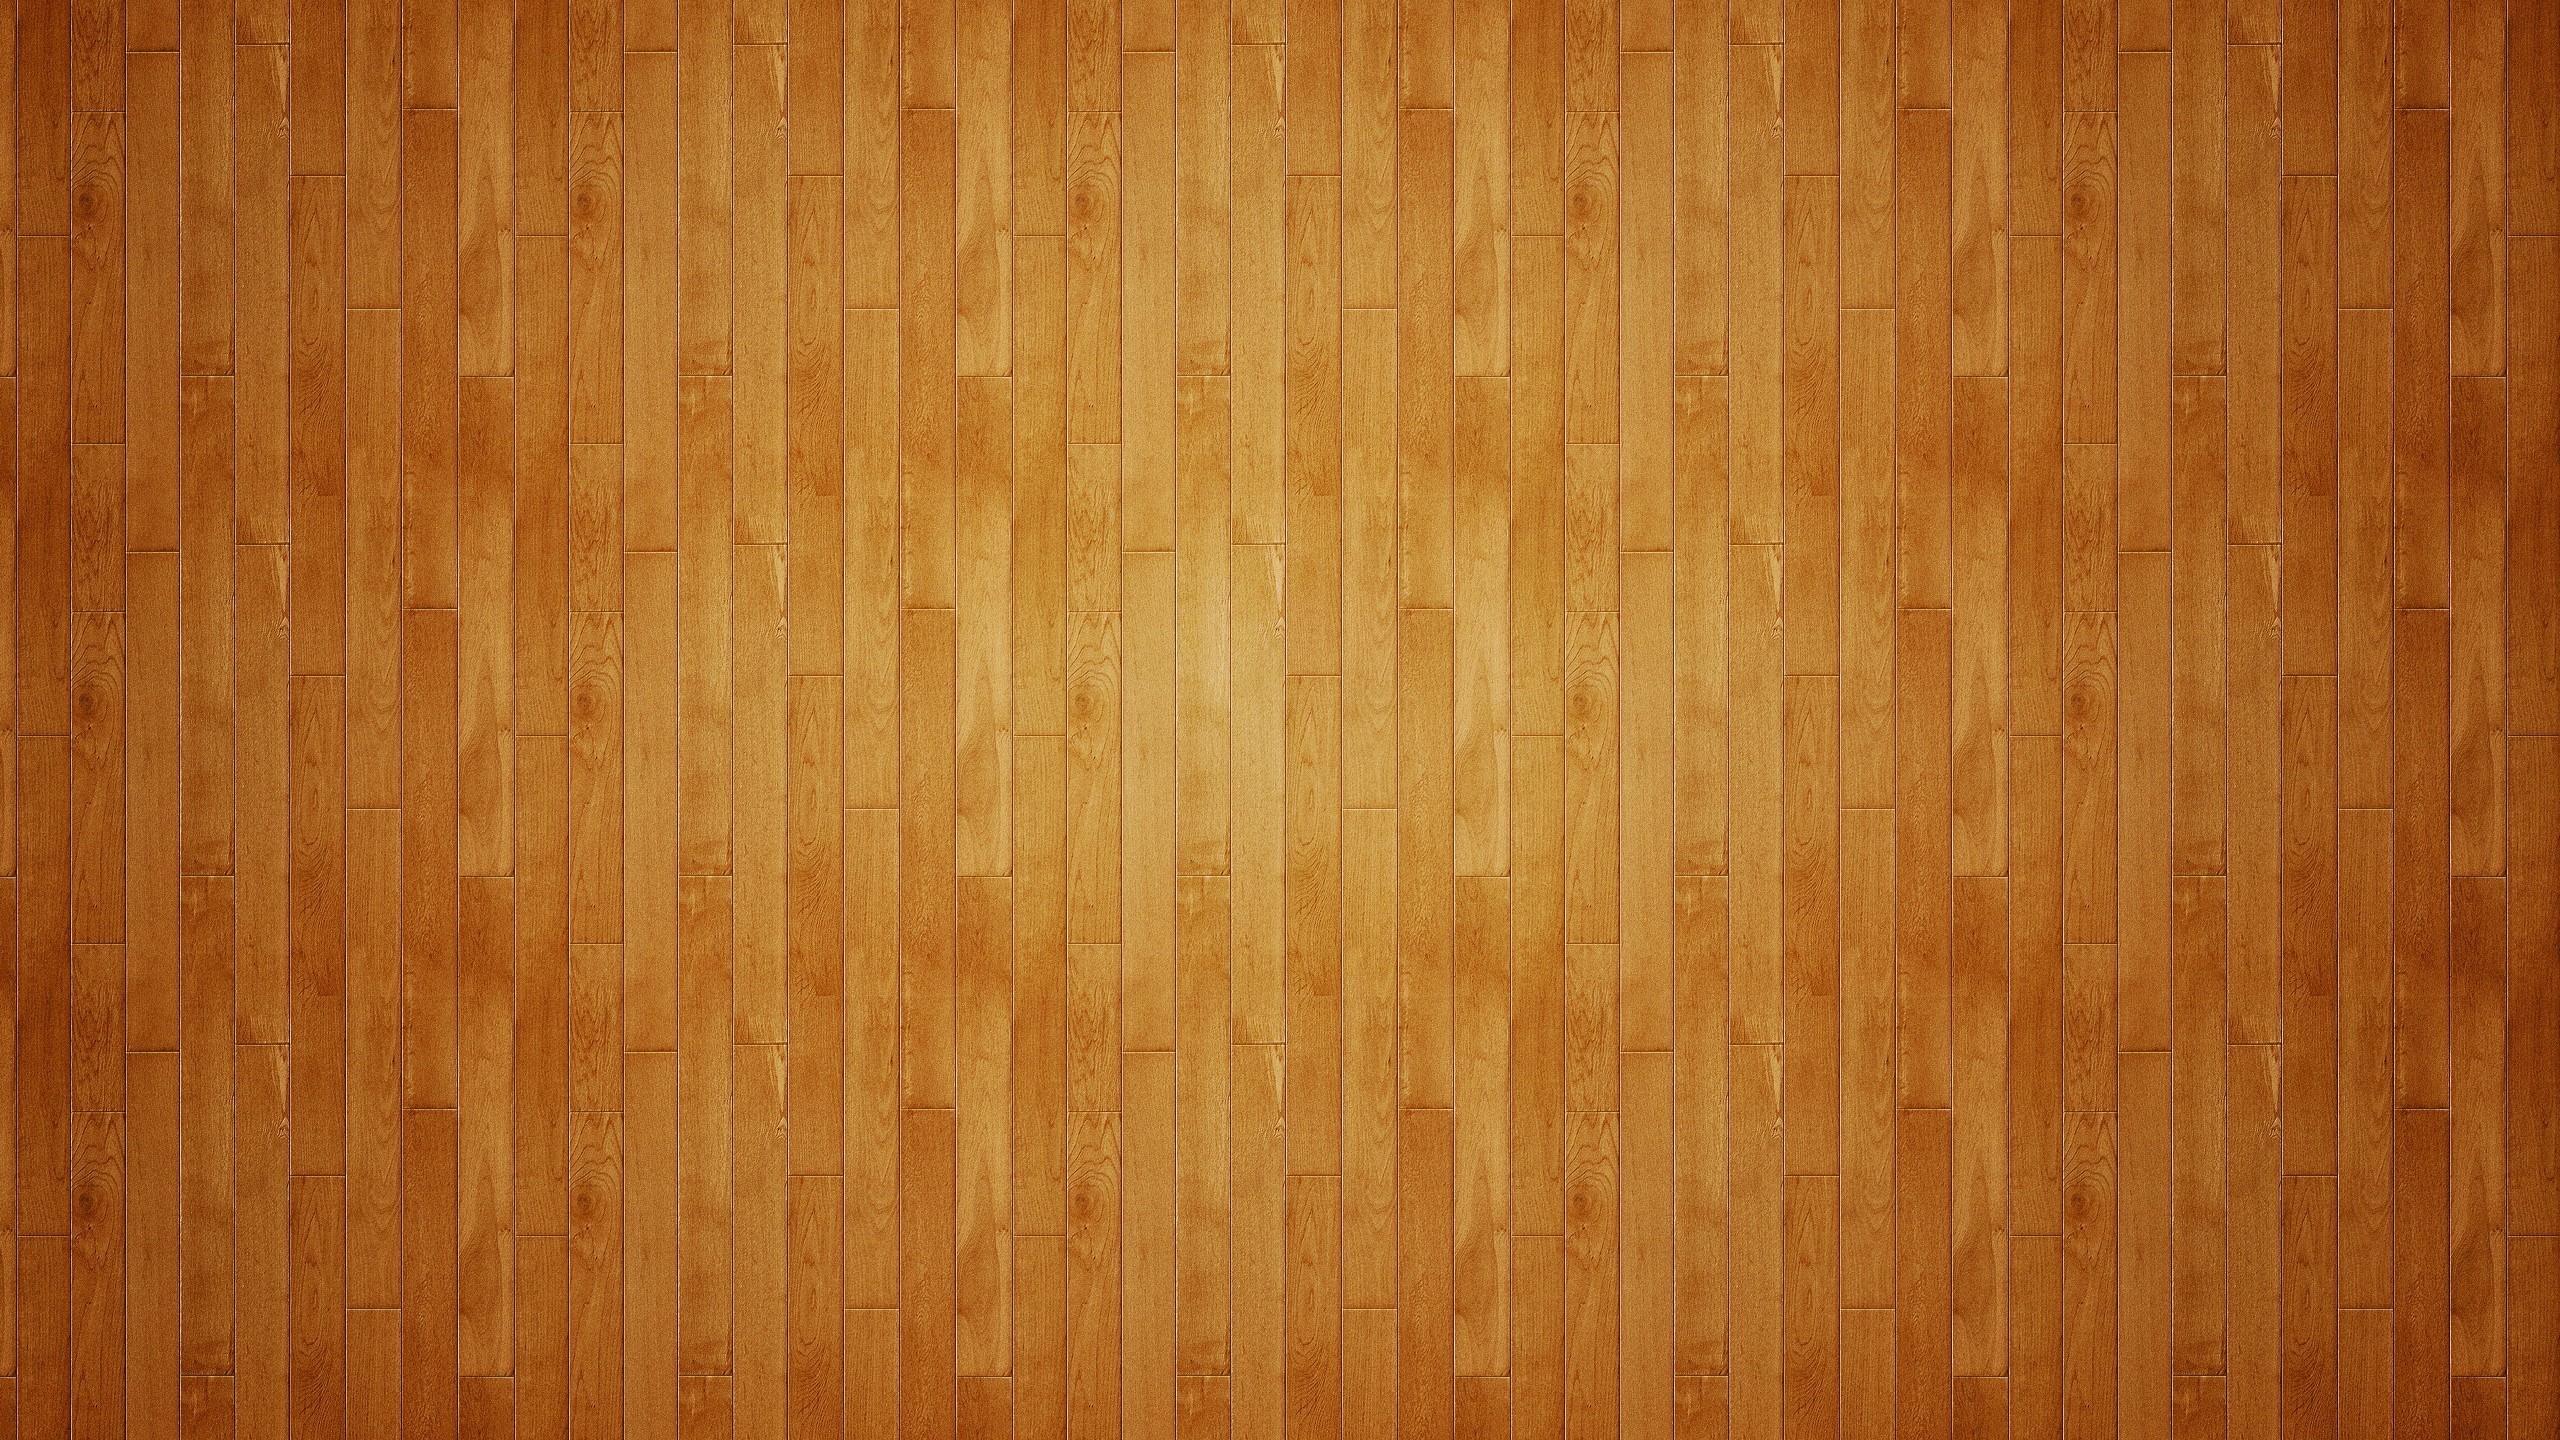 background basketball